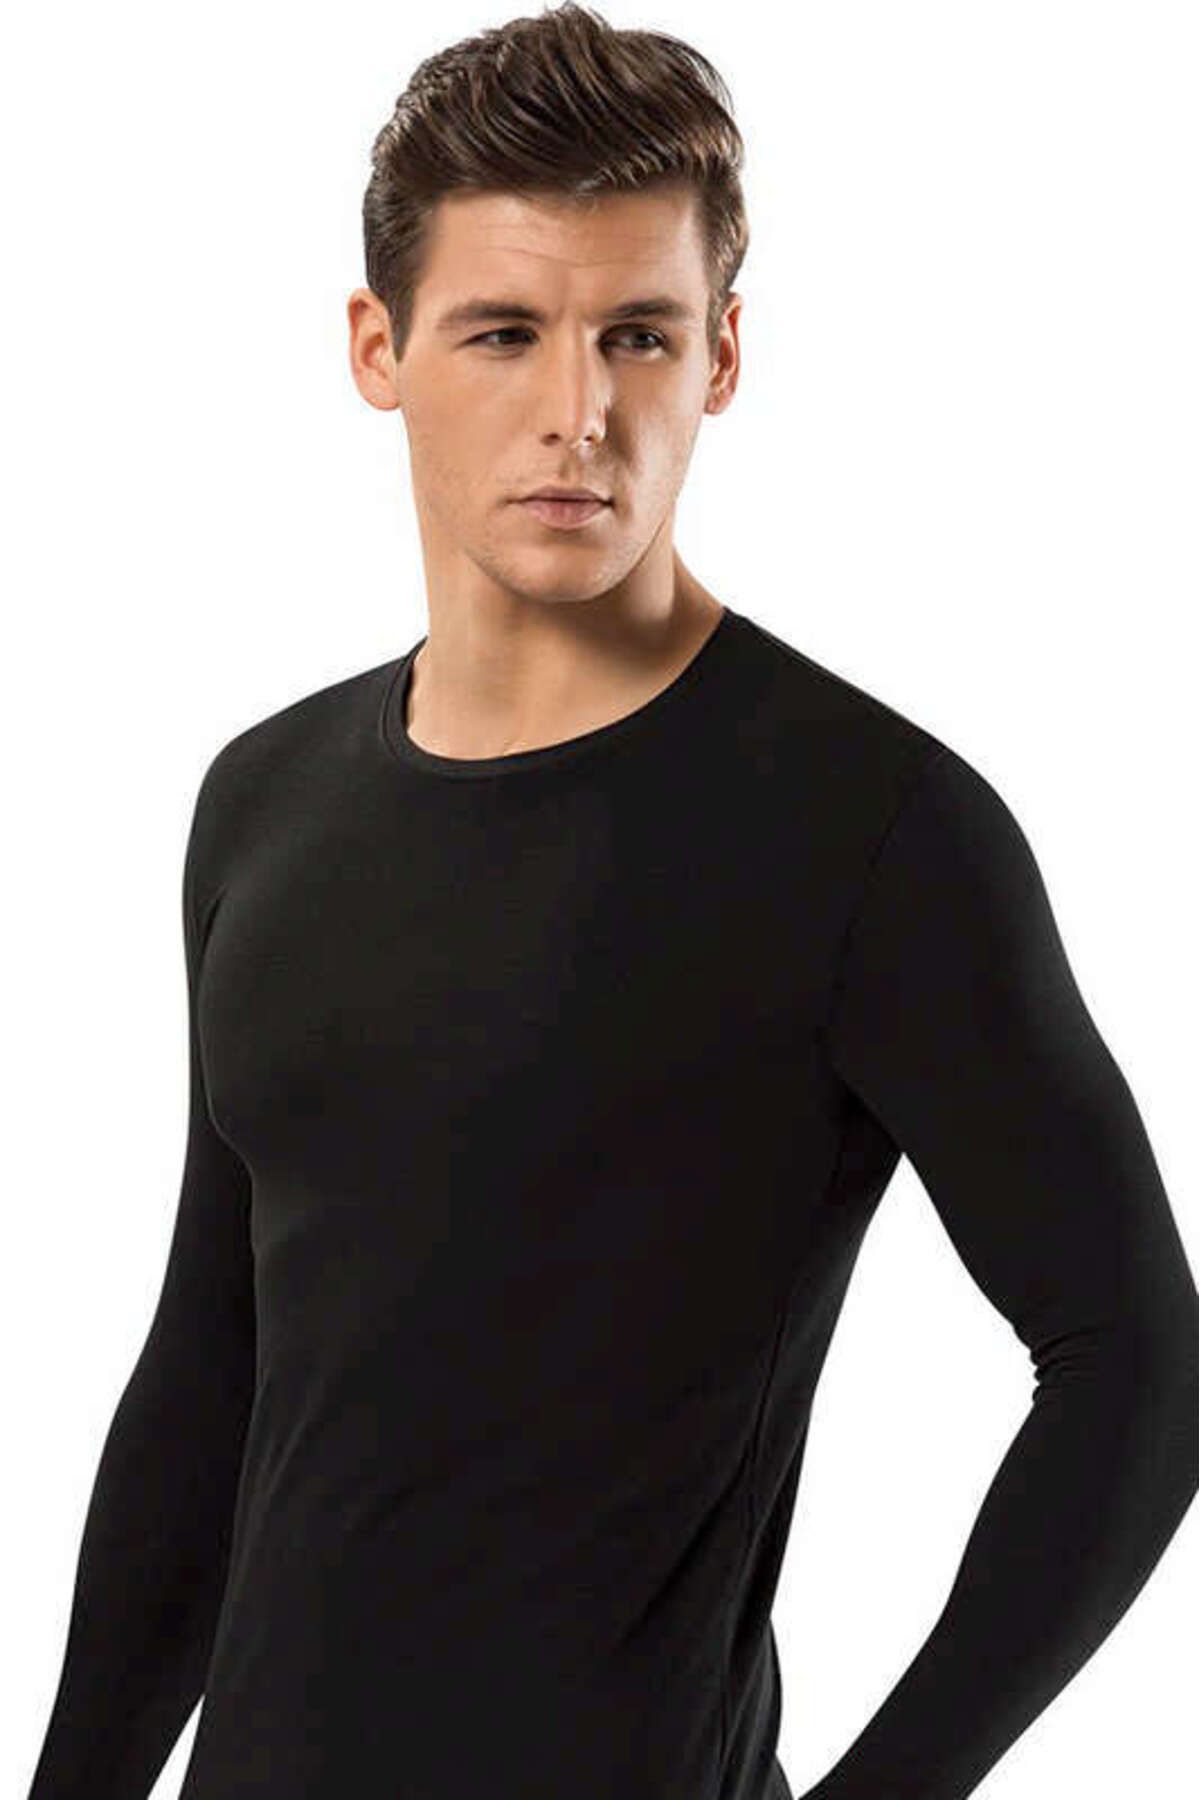 Weweus Erdem Siyah Slim Fit Uzun Kol T-Shirt 1123 Renk Gri Beden XL 402118